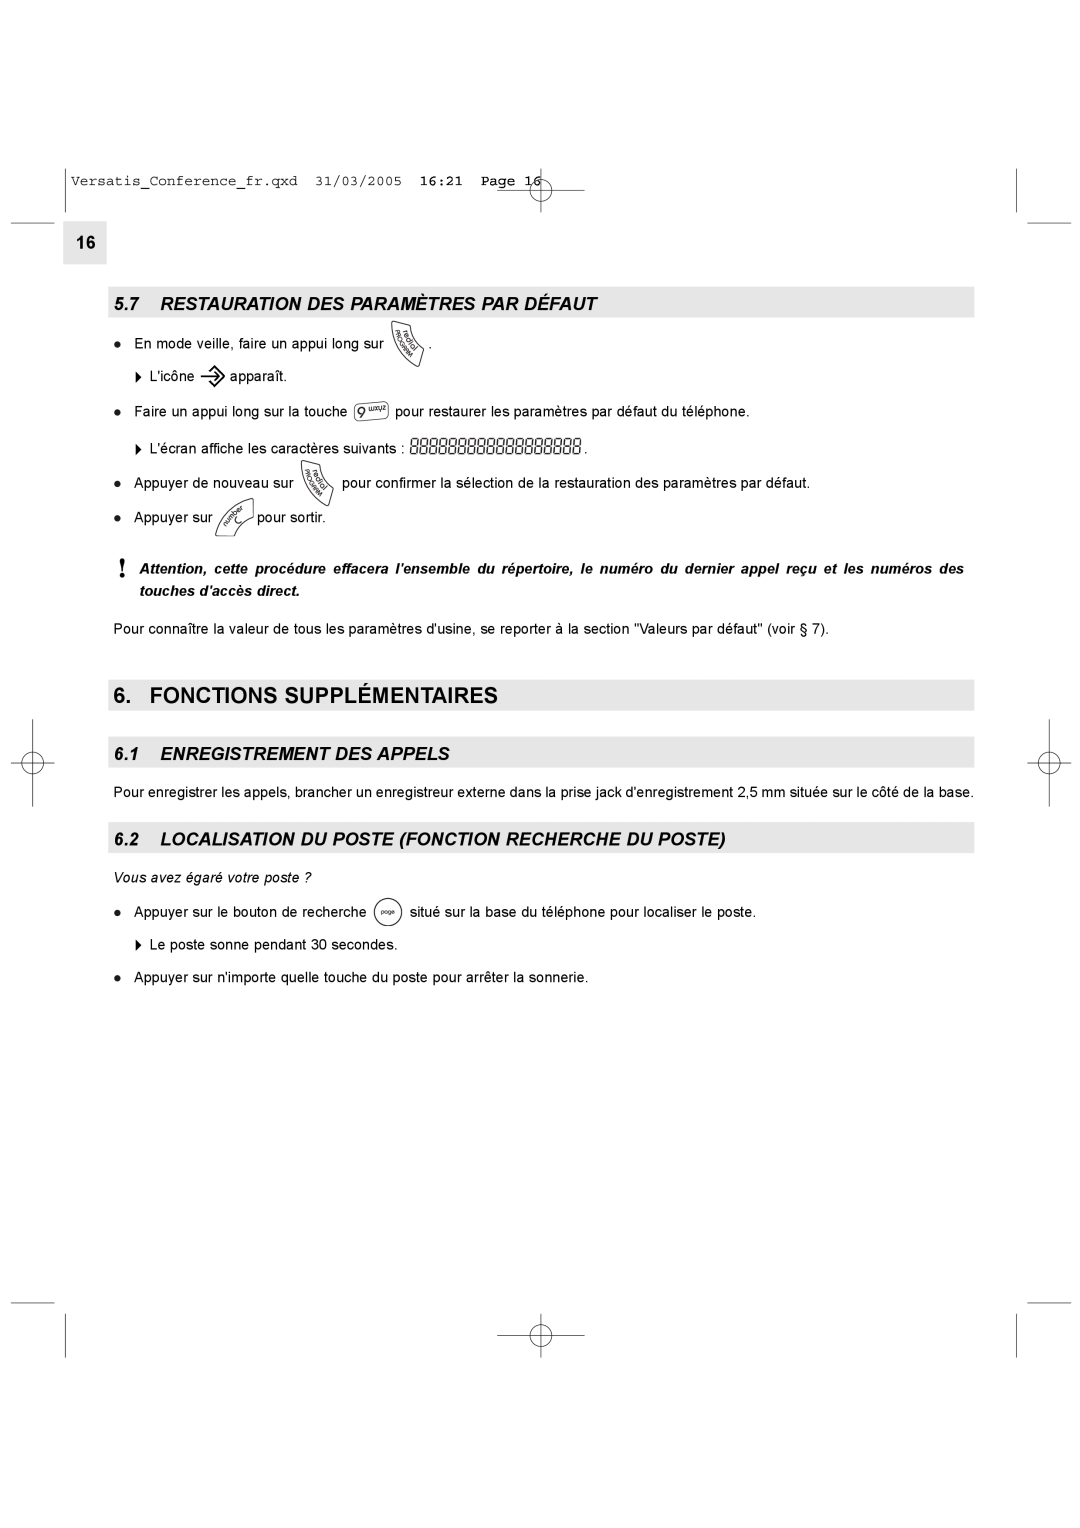 Alcatel Carrier Internetworking Solutions Conference Phone manual Fonctions Supplémentaires, Enregistrement Des Appels 